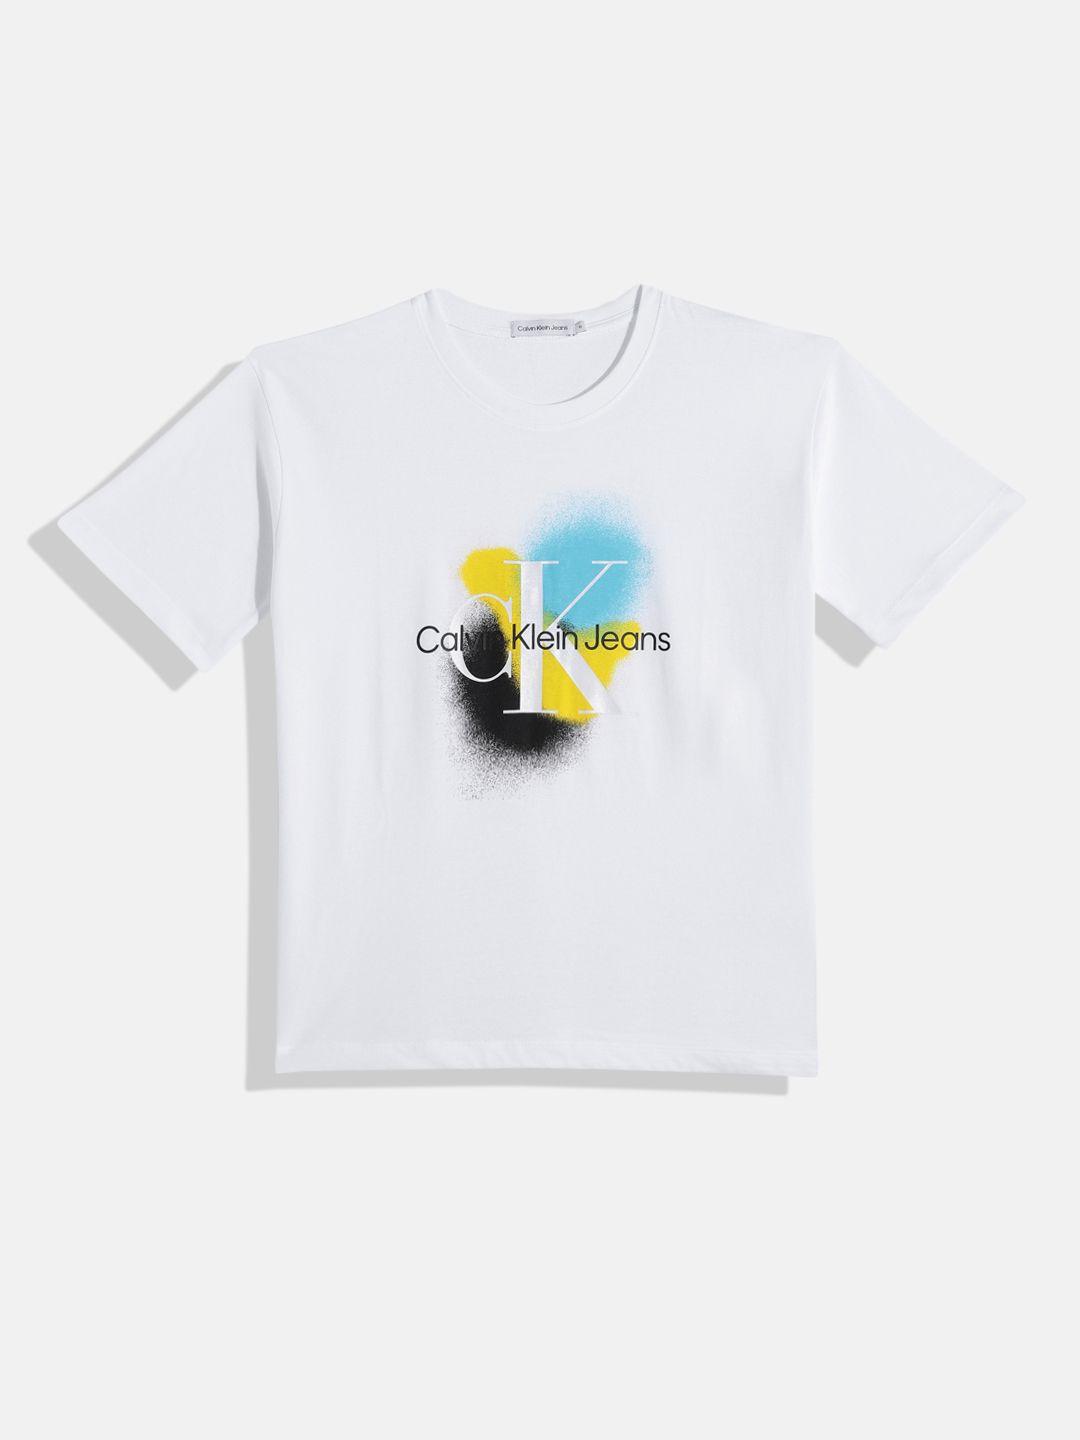 calvin klein jeans kids brand logo spray printed pure cotton t-shirt